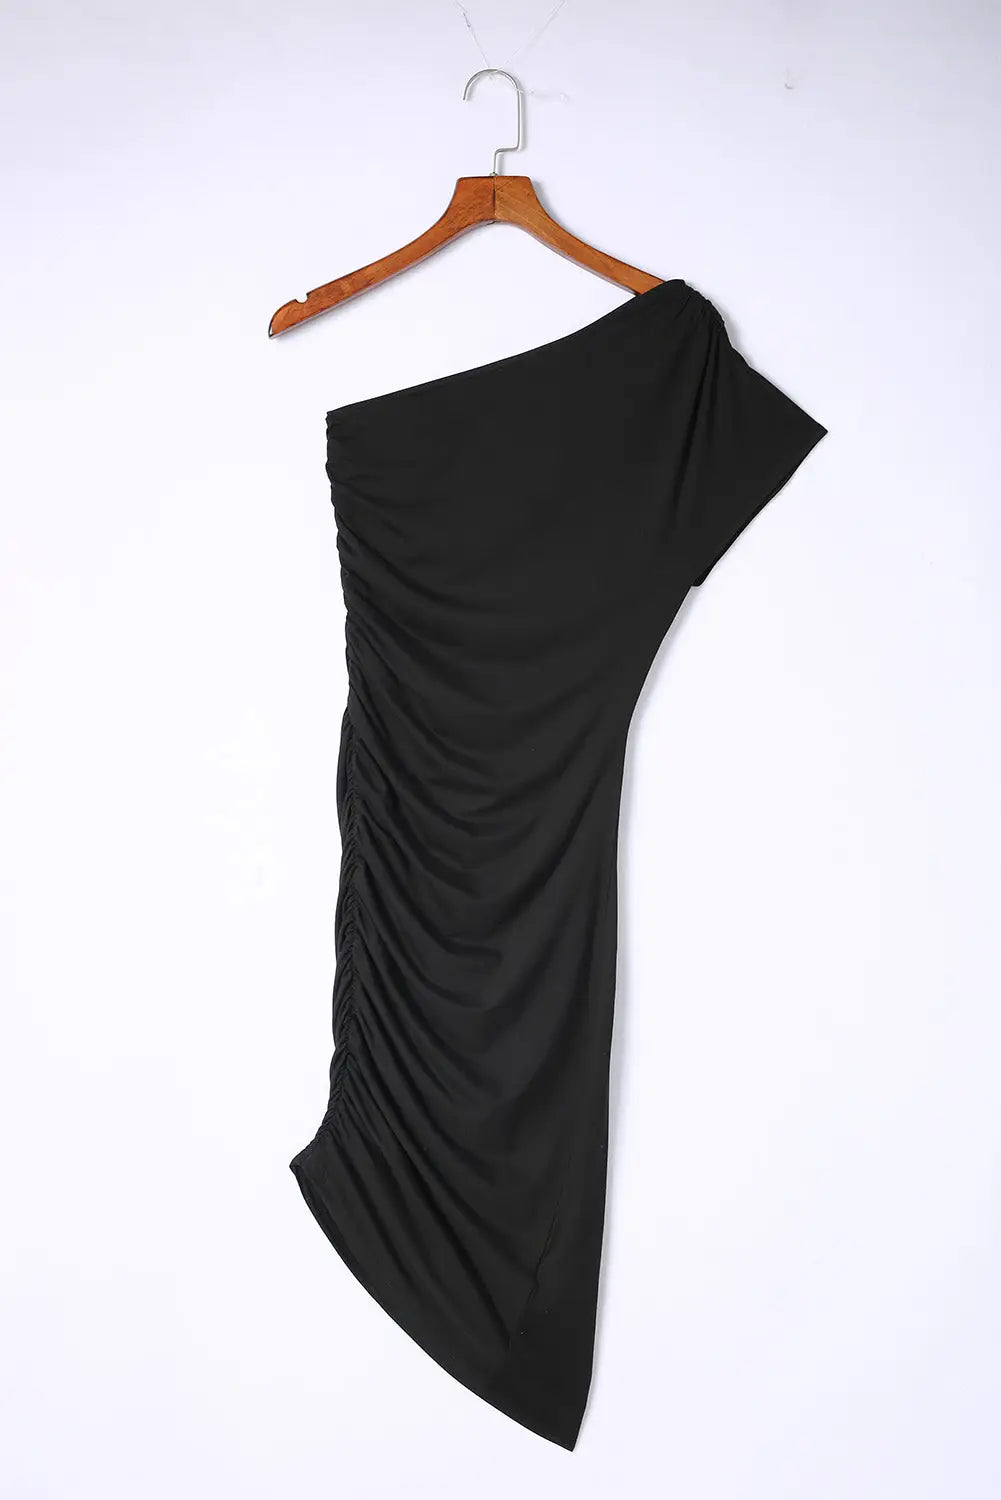 Black one-shoulder short sleeve ruched bodycon dress - dresses